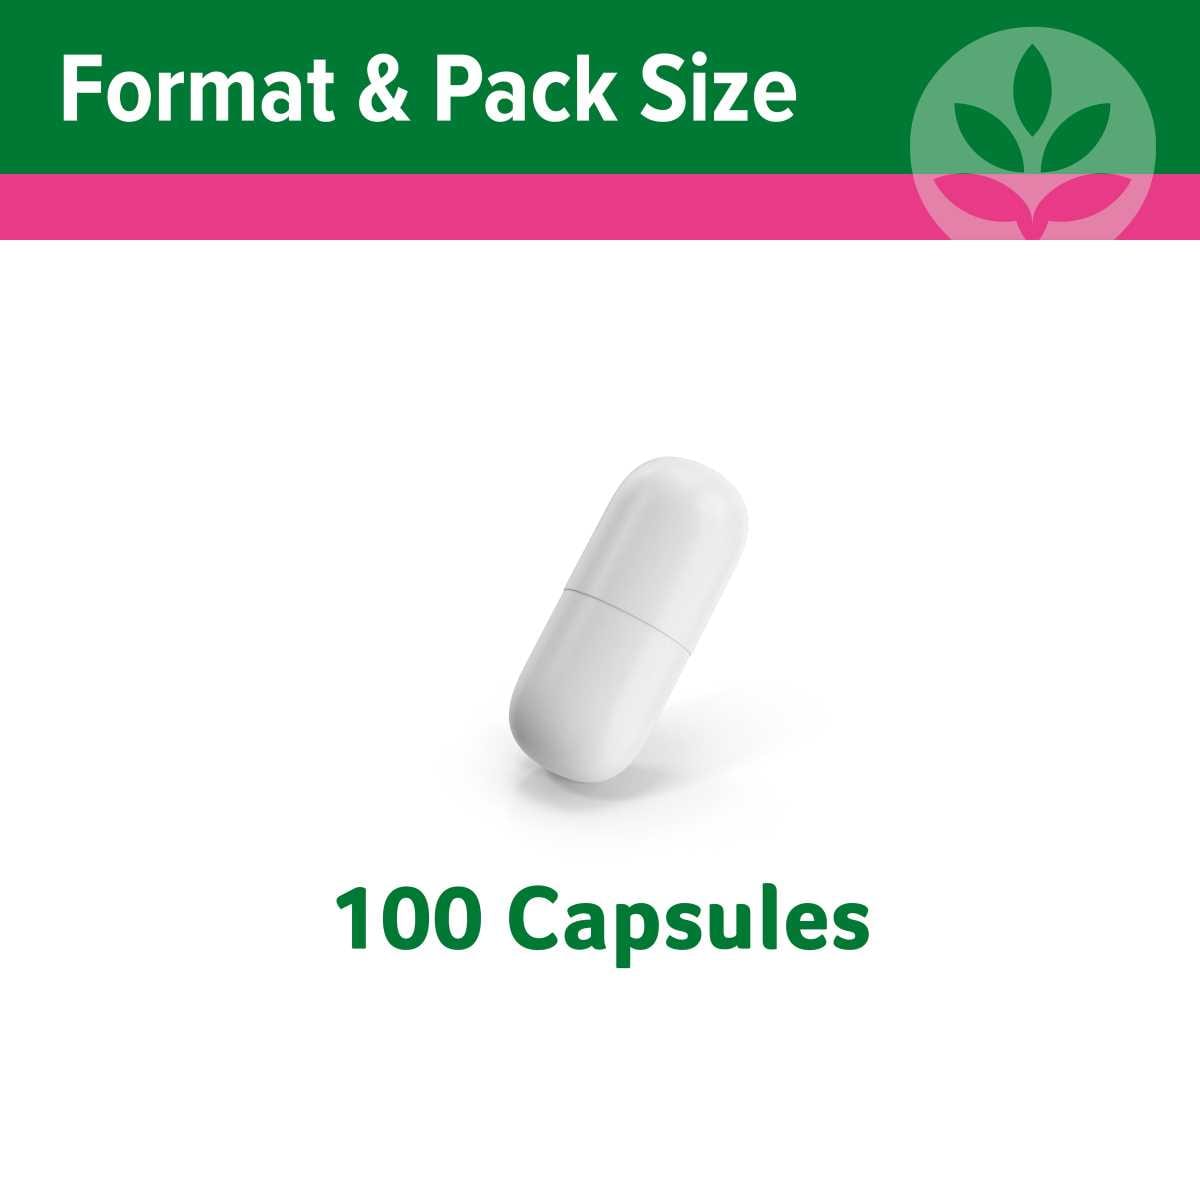 Cenovis Once Daily Womens Multi Vitamin 100 Capsules